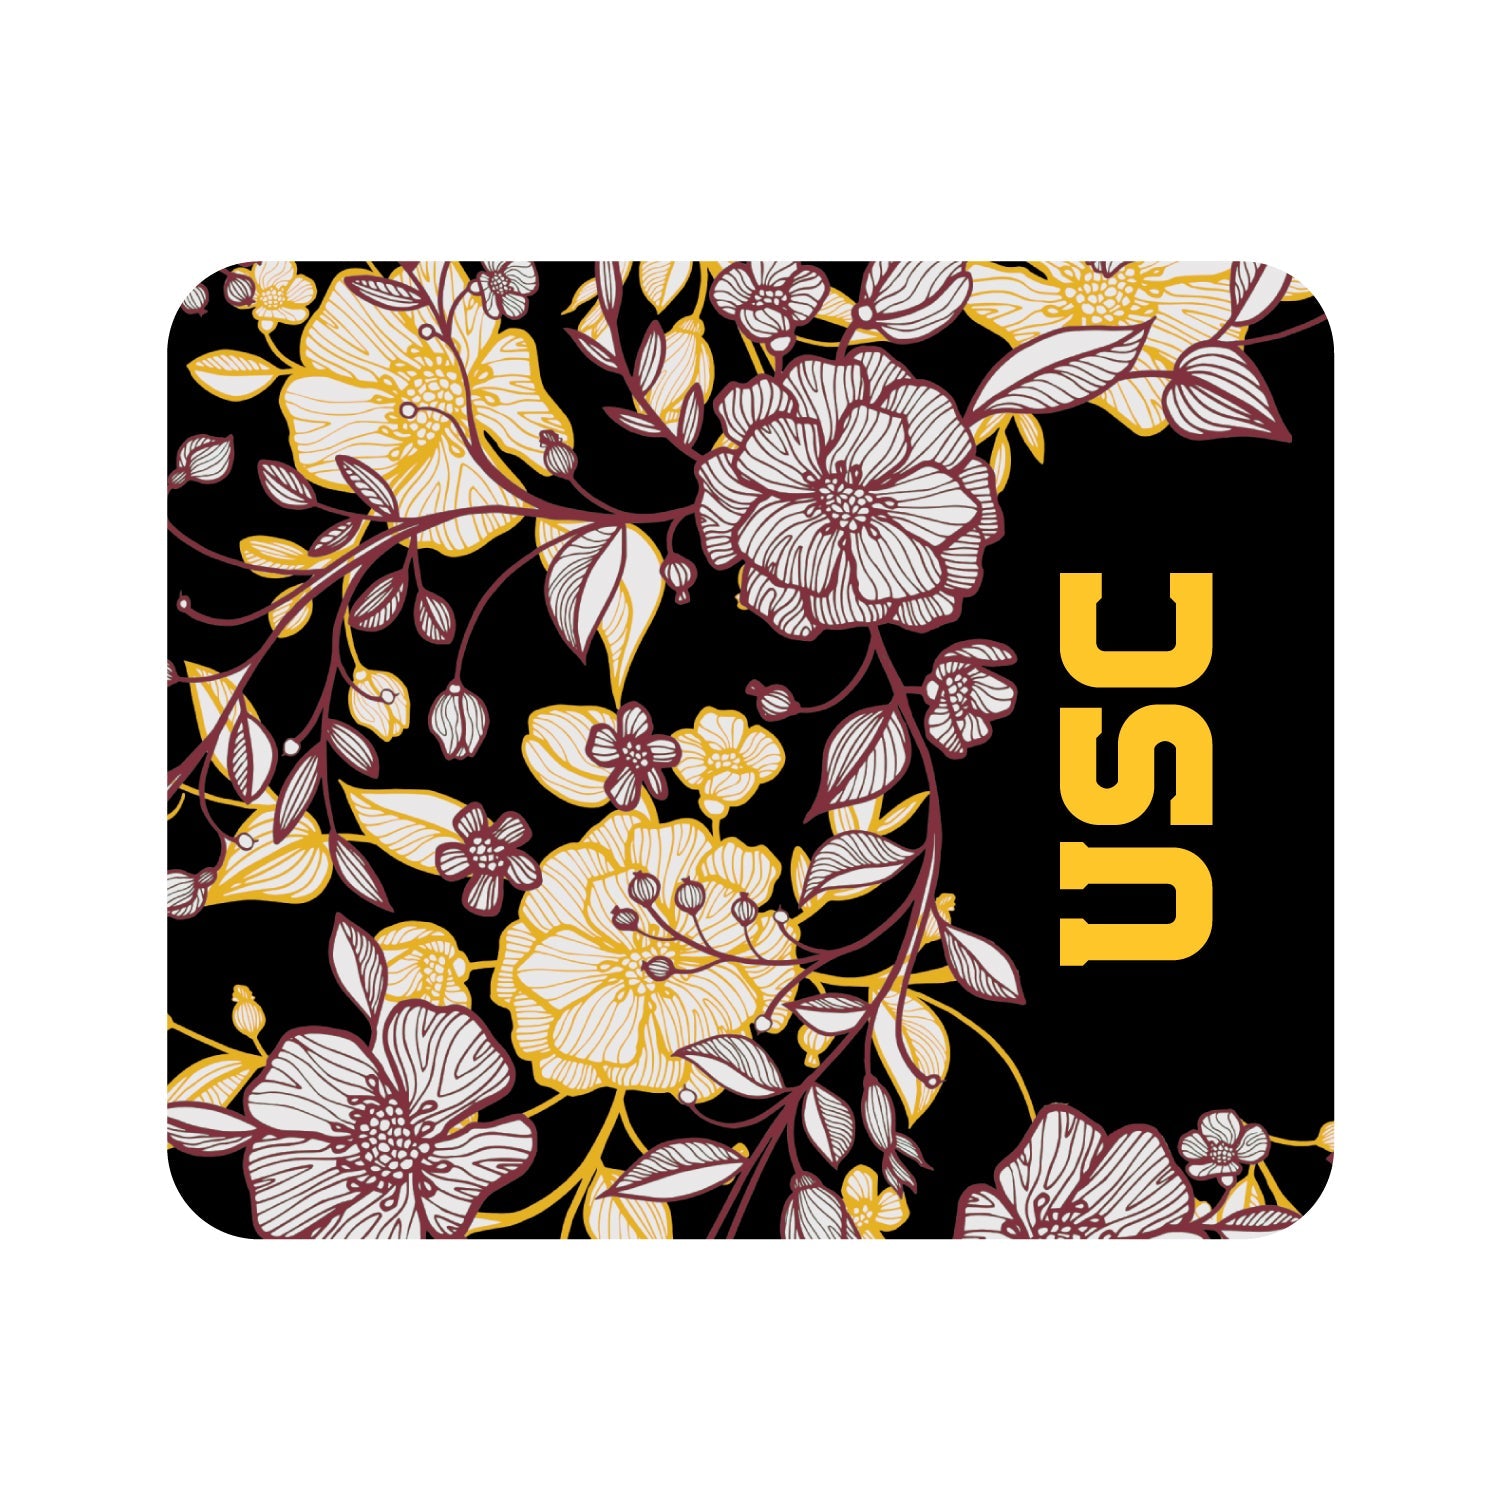 University of Southern California V4 Black Mousepad, Floral Lace V1